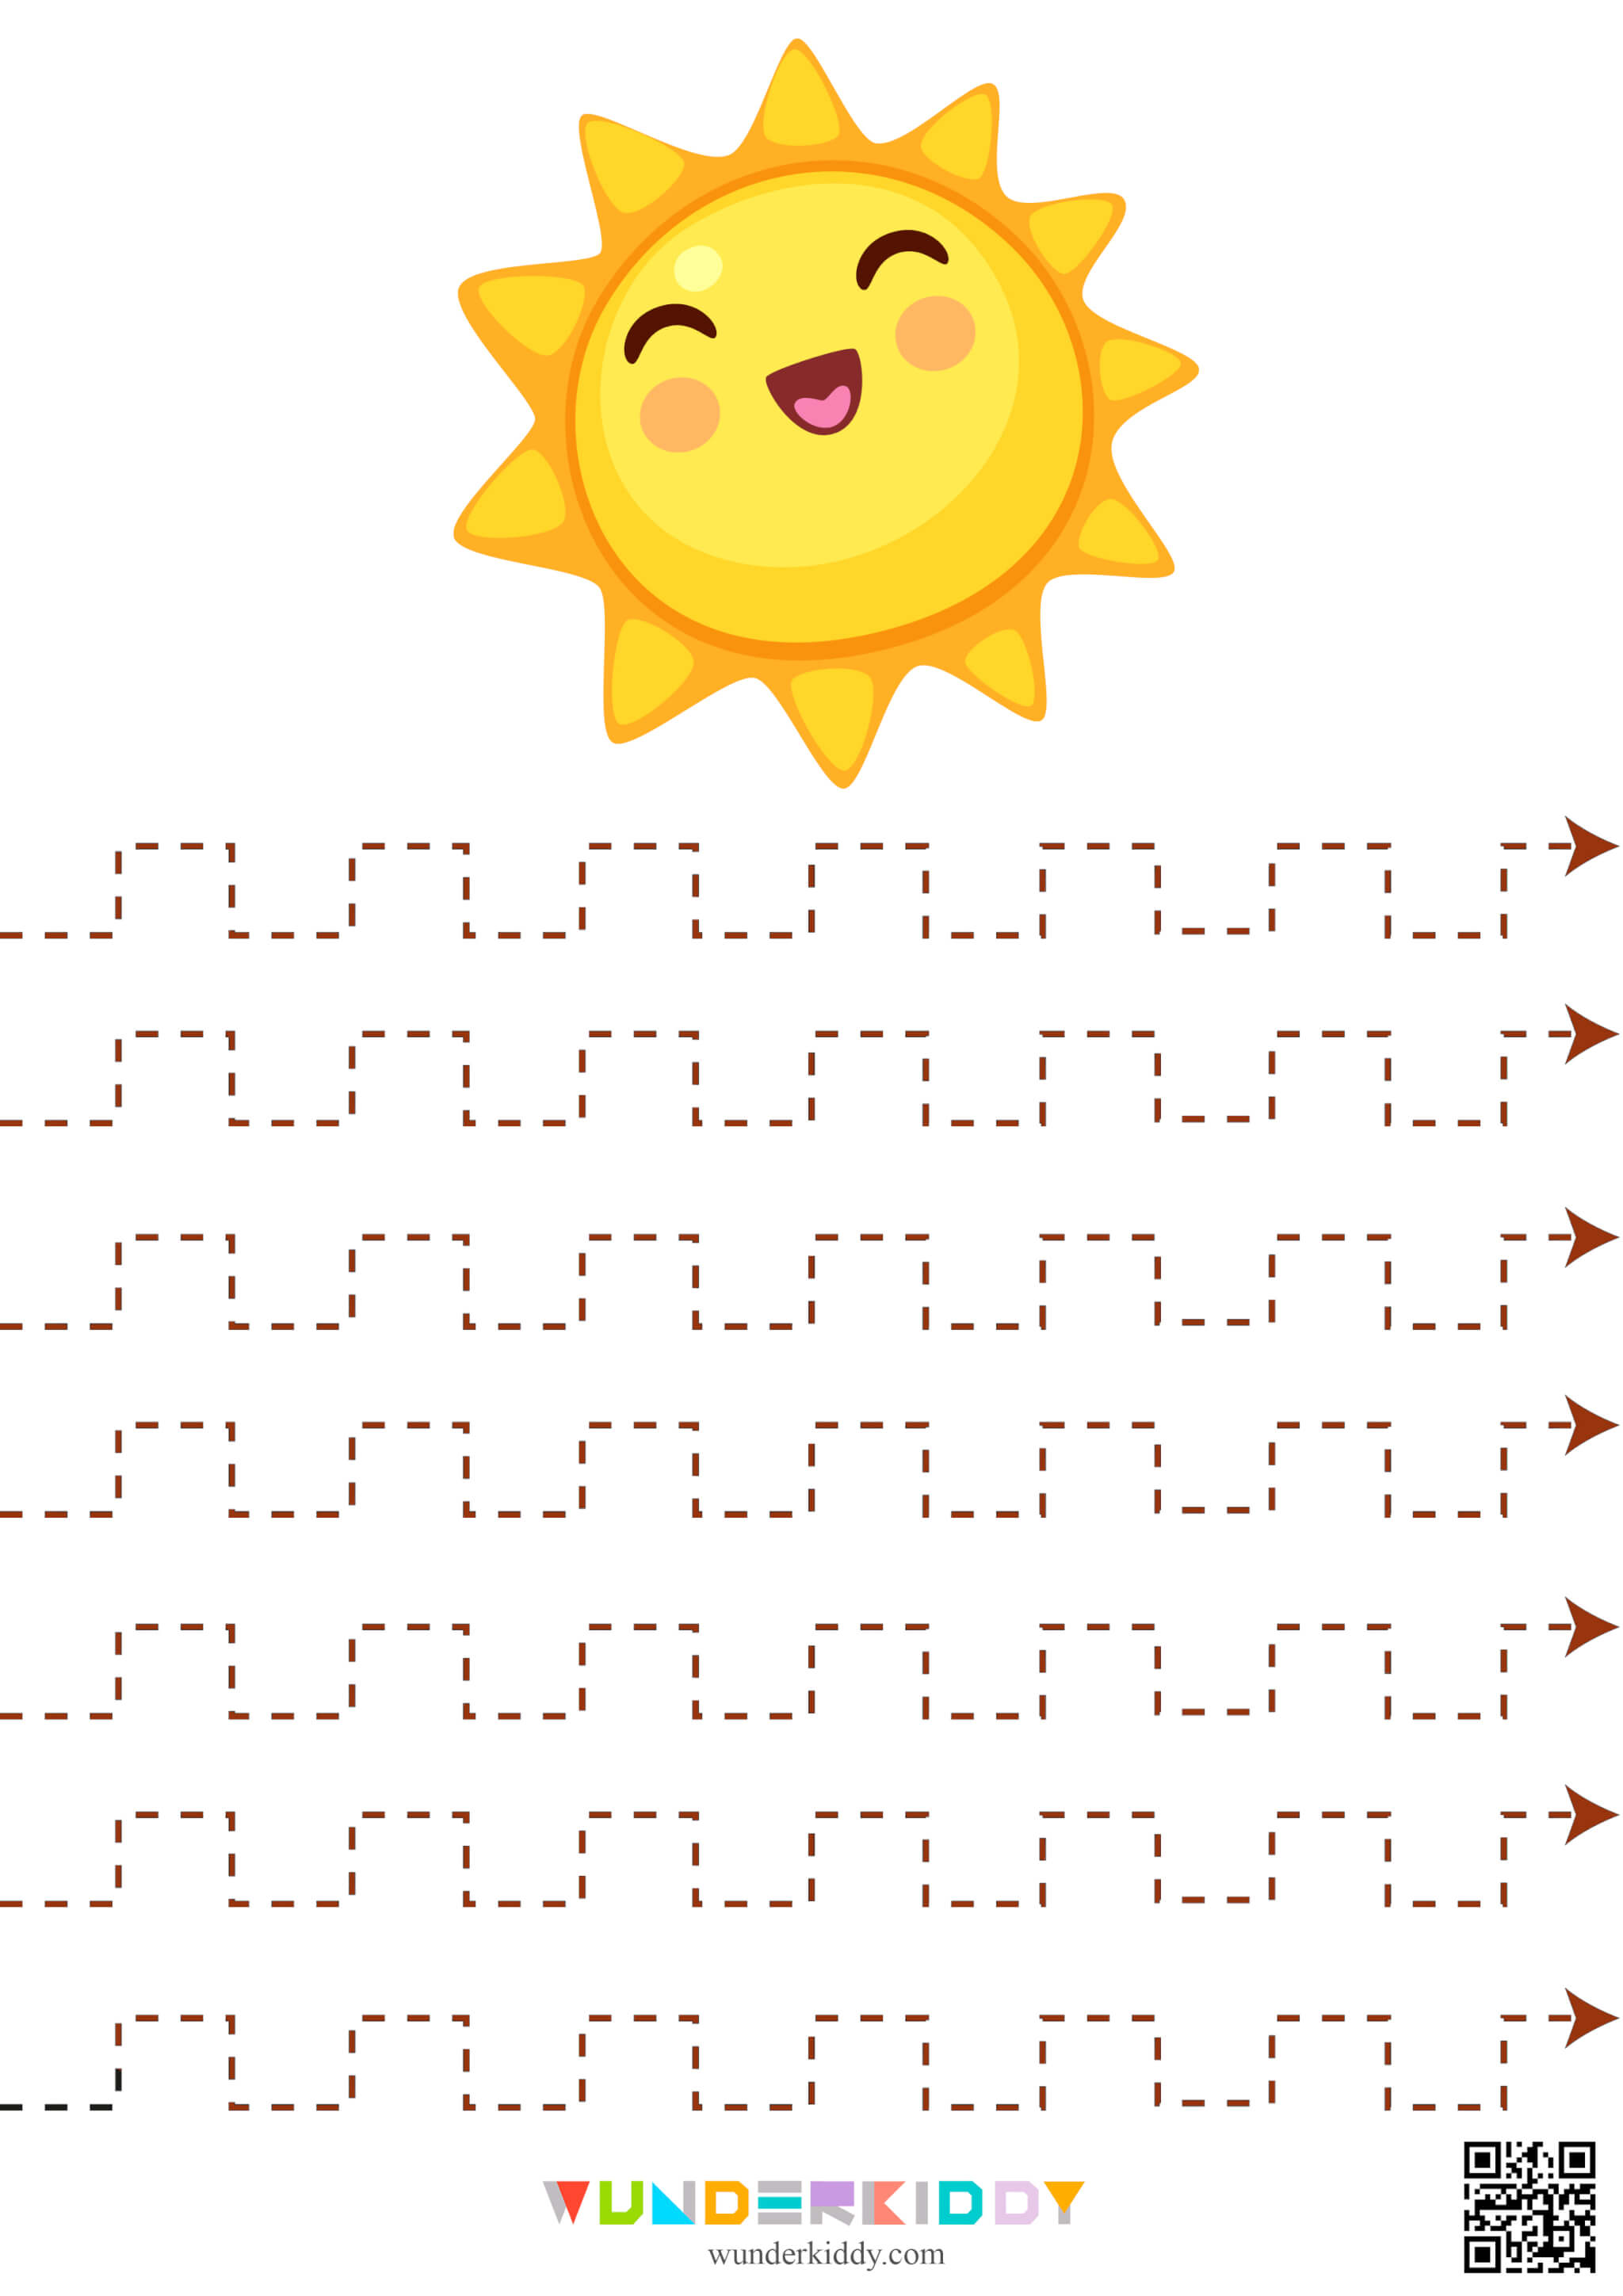 Worksheets «Sunshine» - Image 5